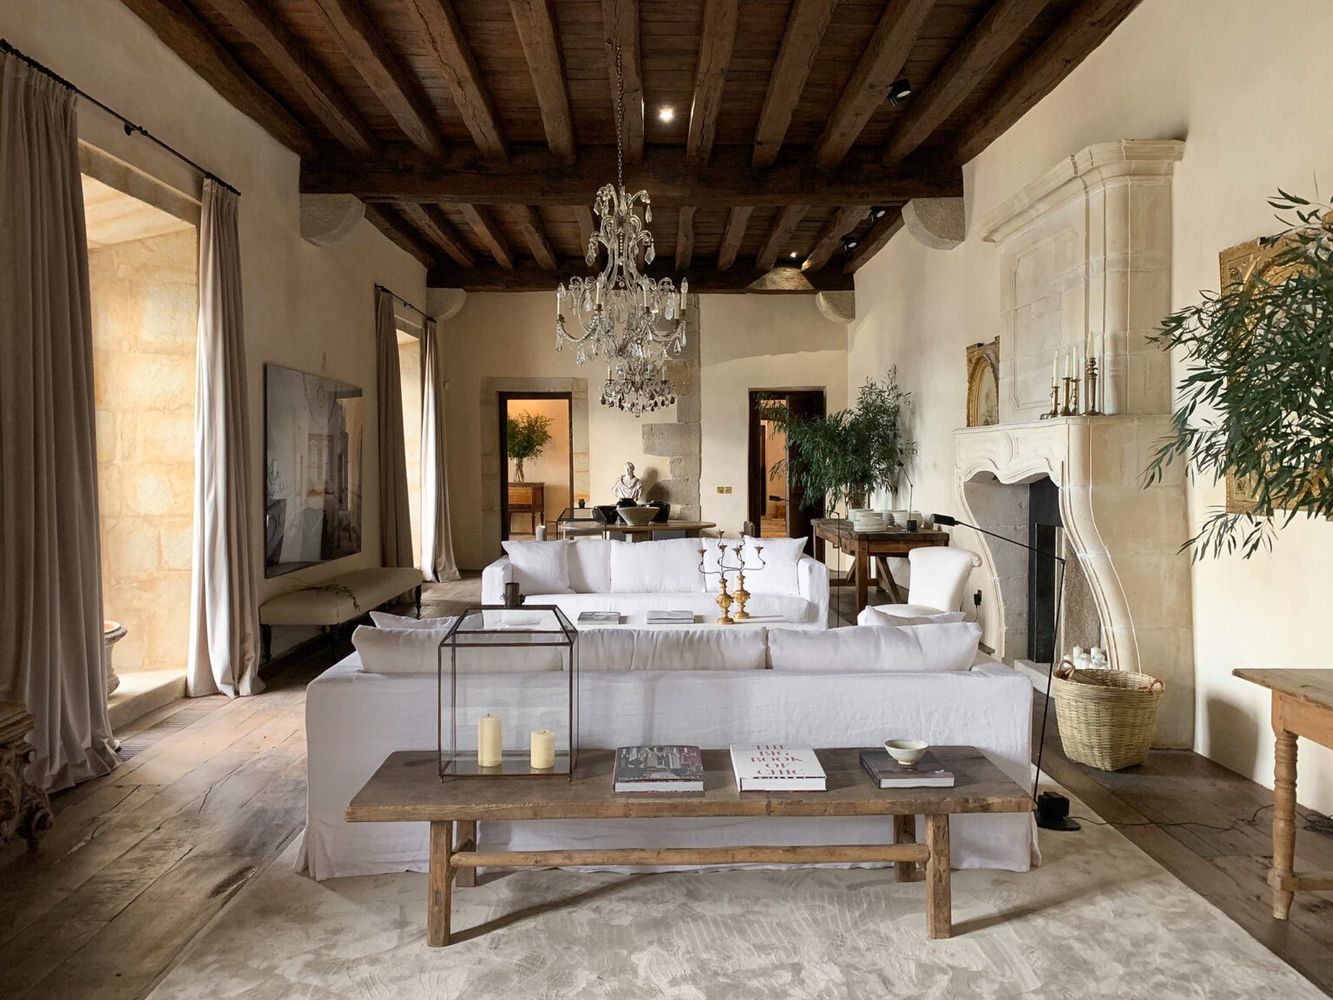 Spanish living room design